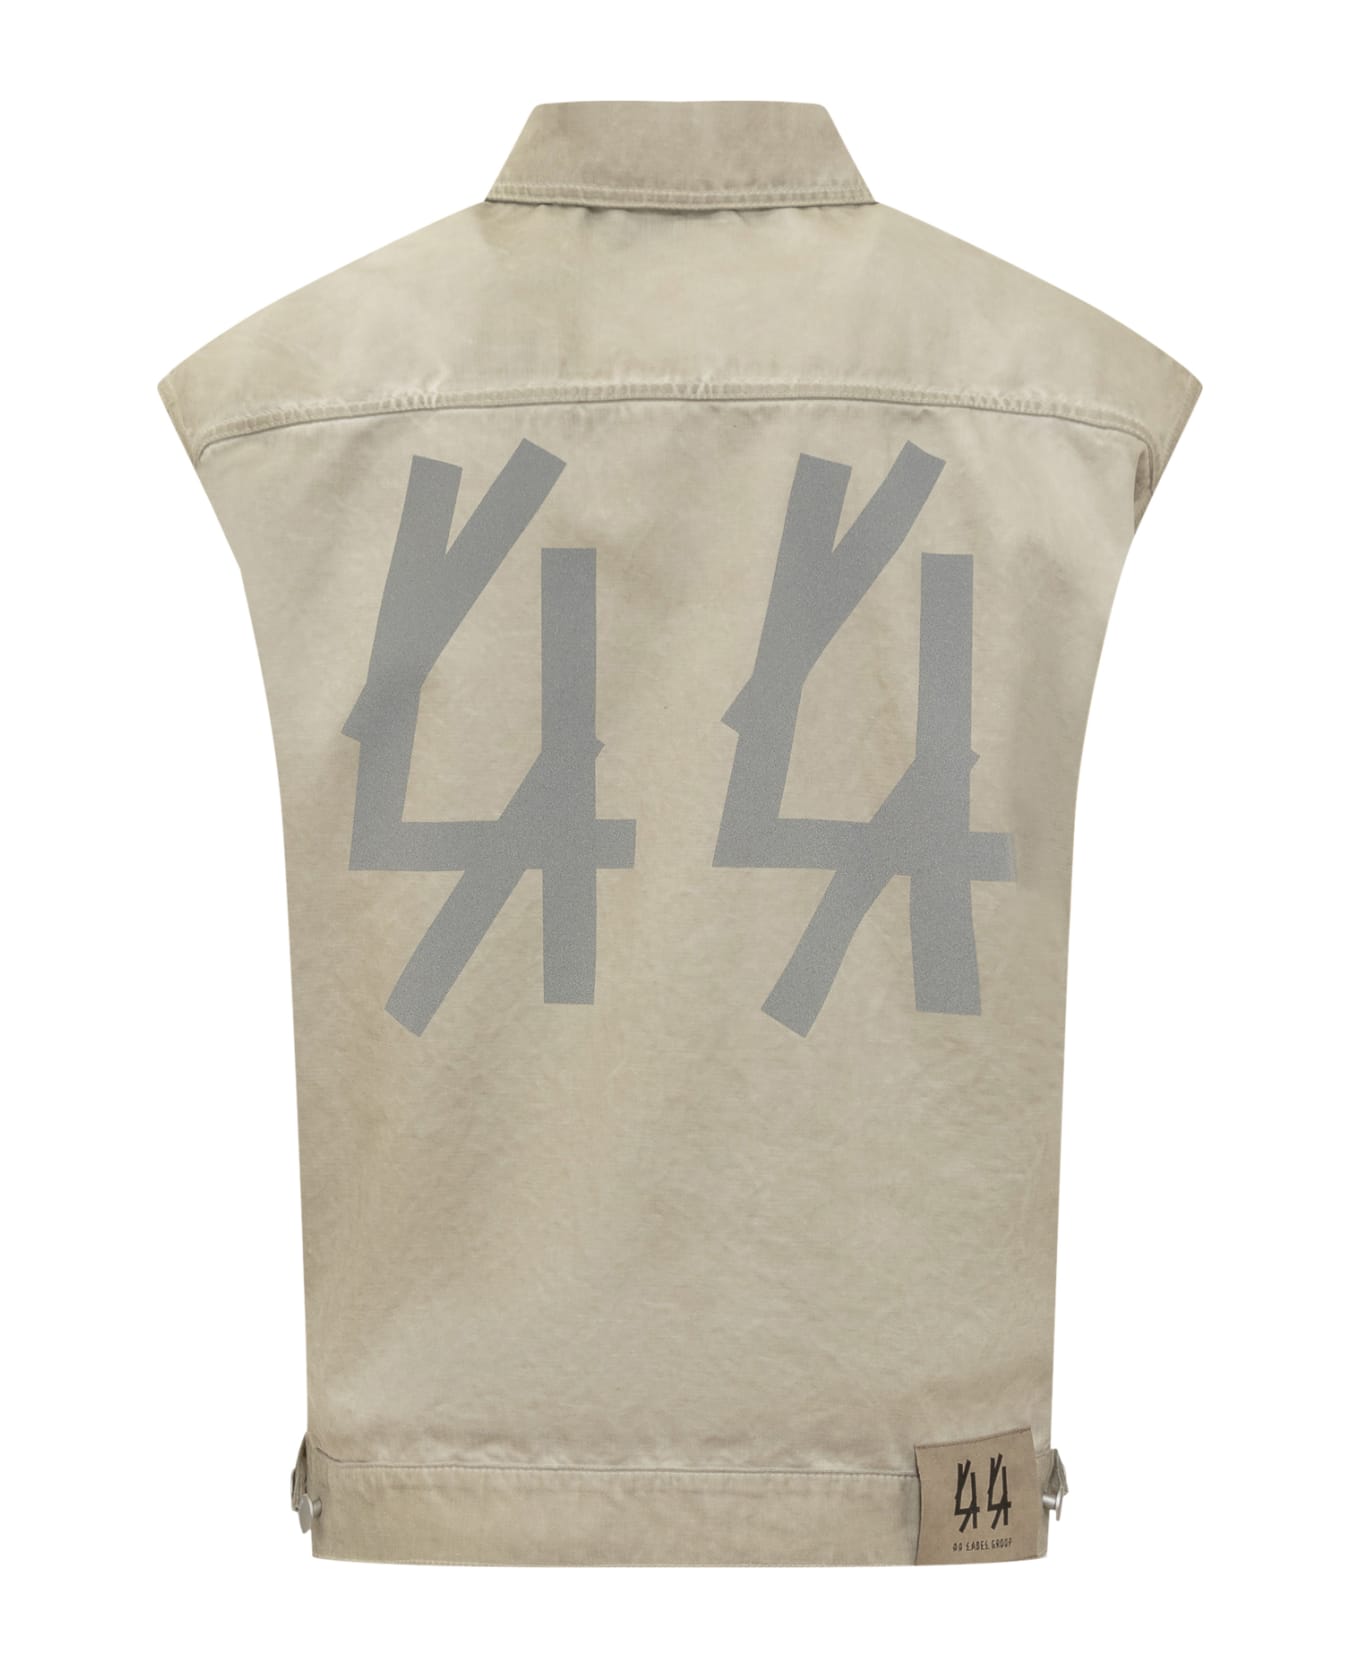 44 Label Group Vest With Logo - SAND